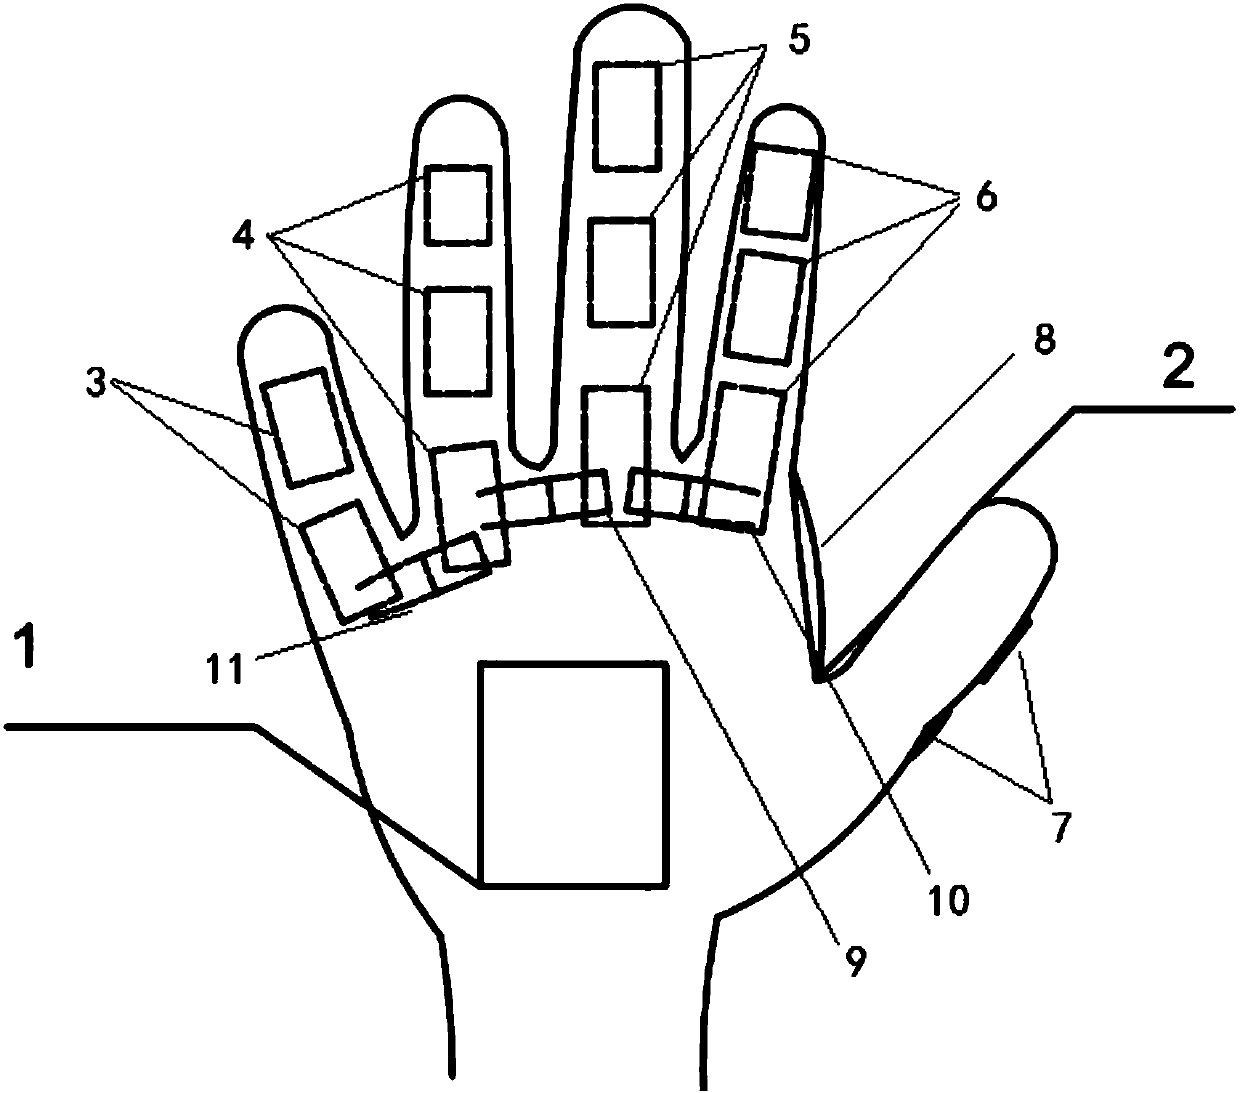 Full-joint measurement type data glove